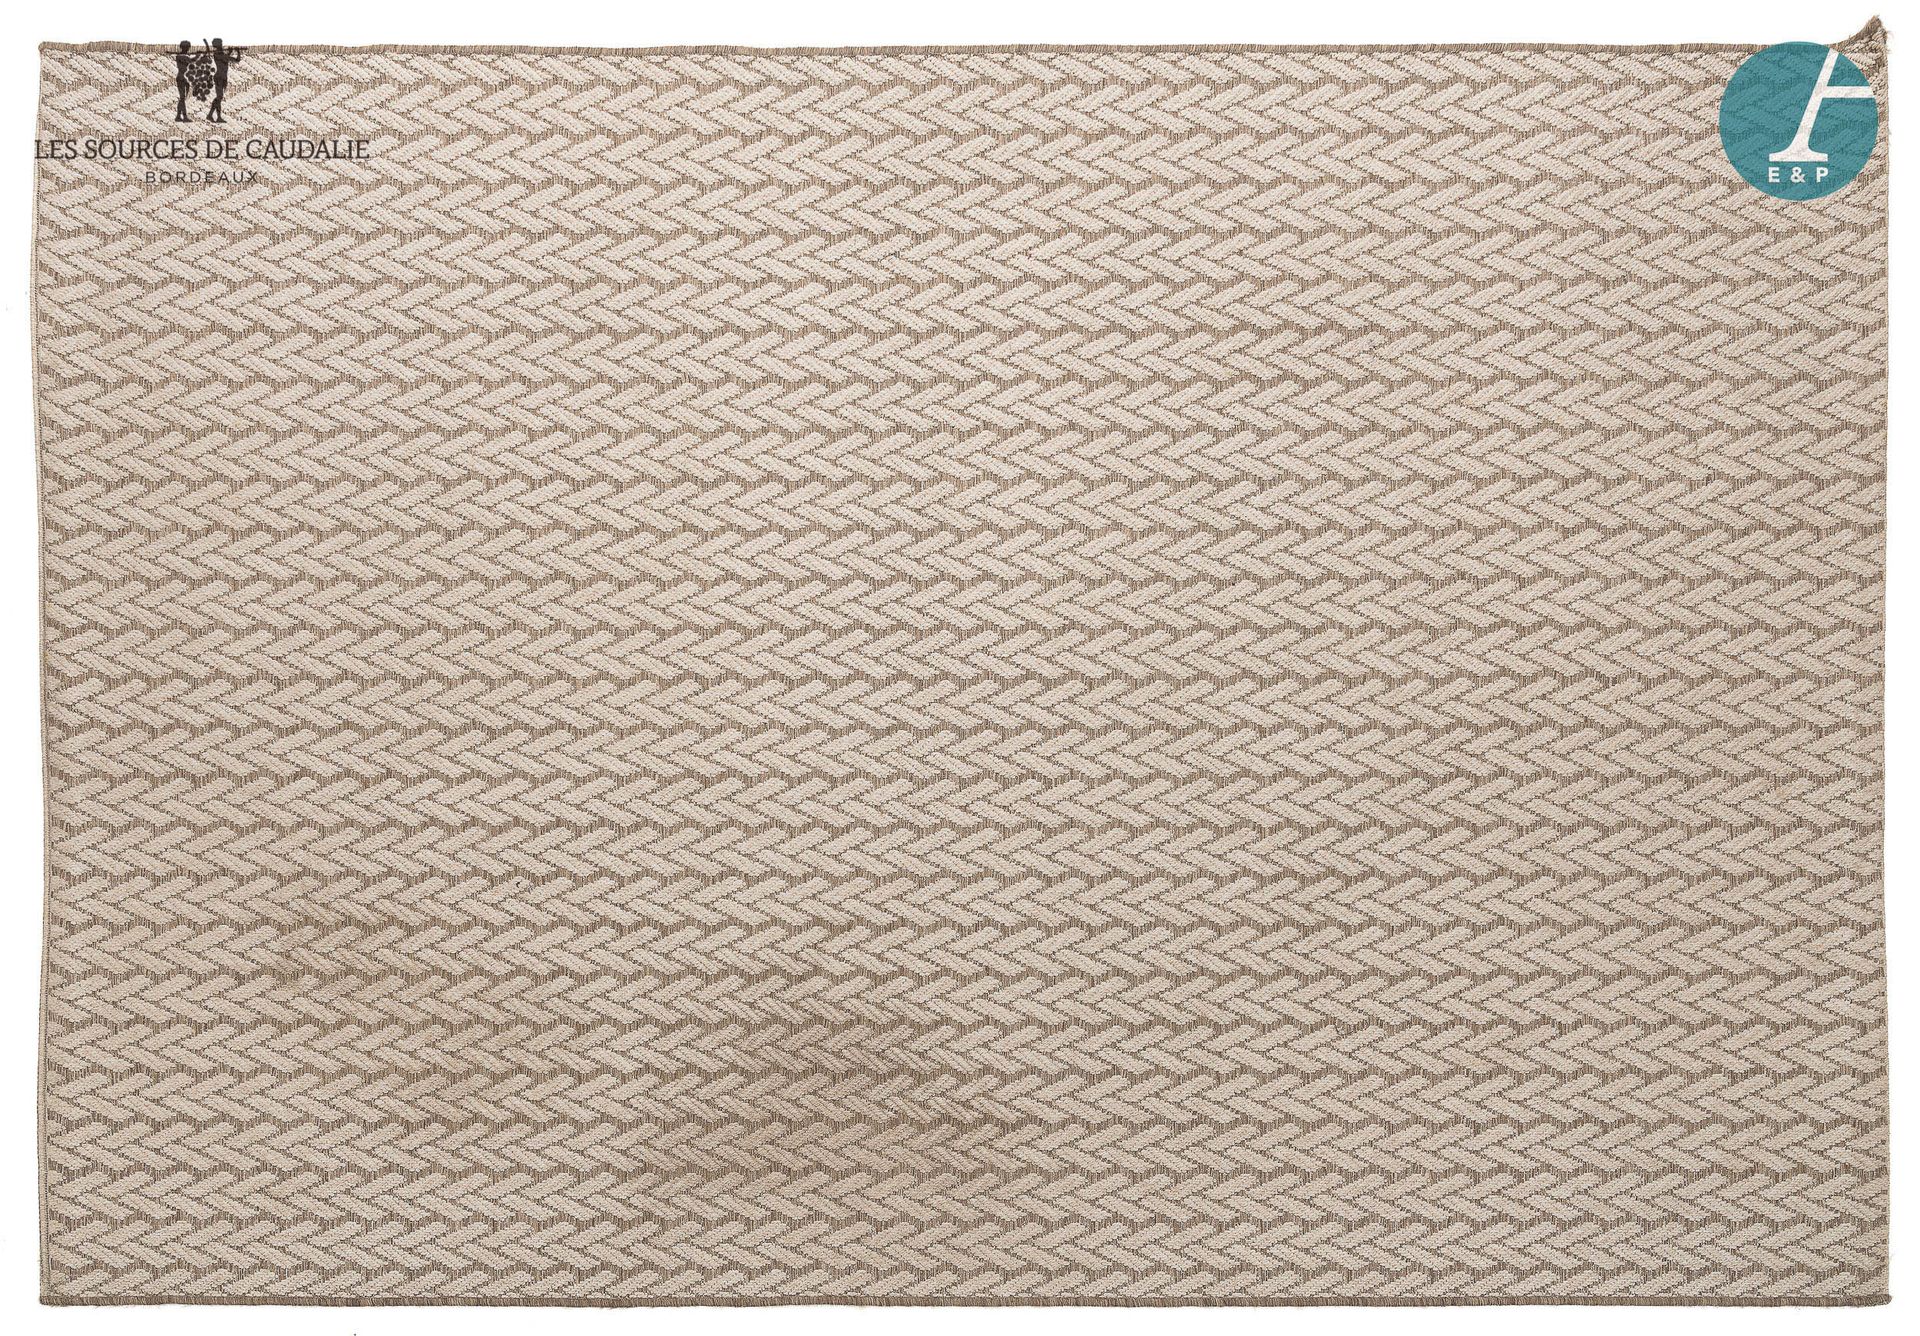 Null 从5号房间 "Le Tonnelier "出发

米色背景的地毯 型号：MOOREA

品牌WINKLER。100% 聚丙烯

160x230厘米

&hellip;